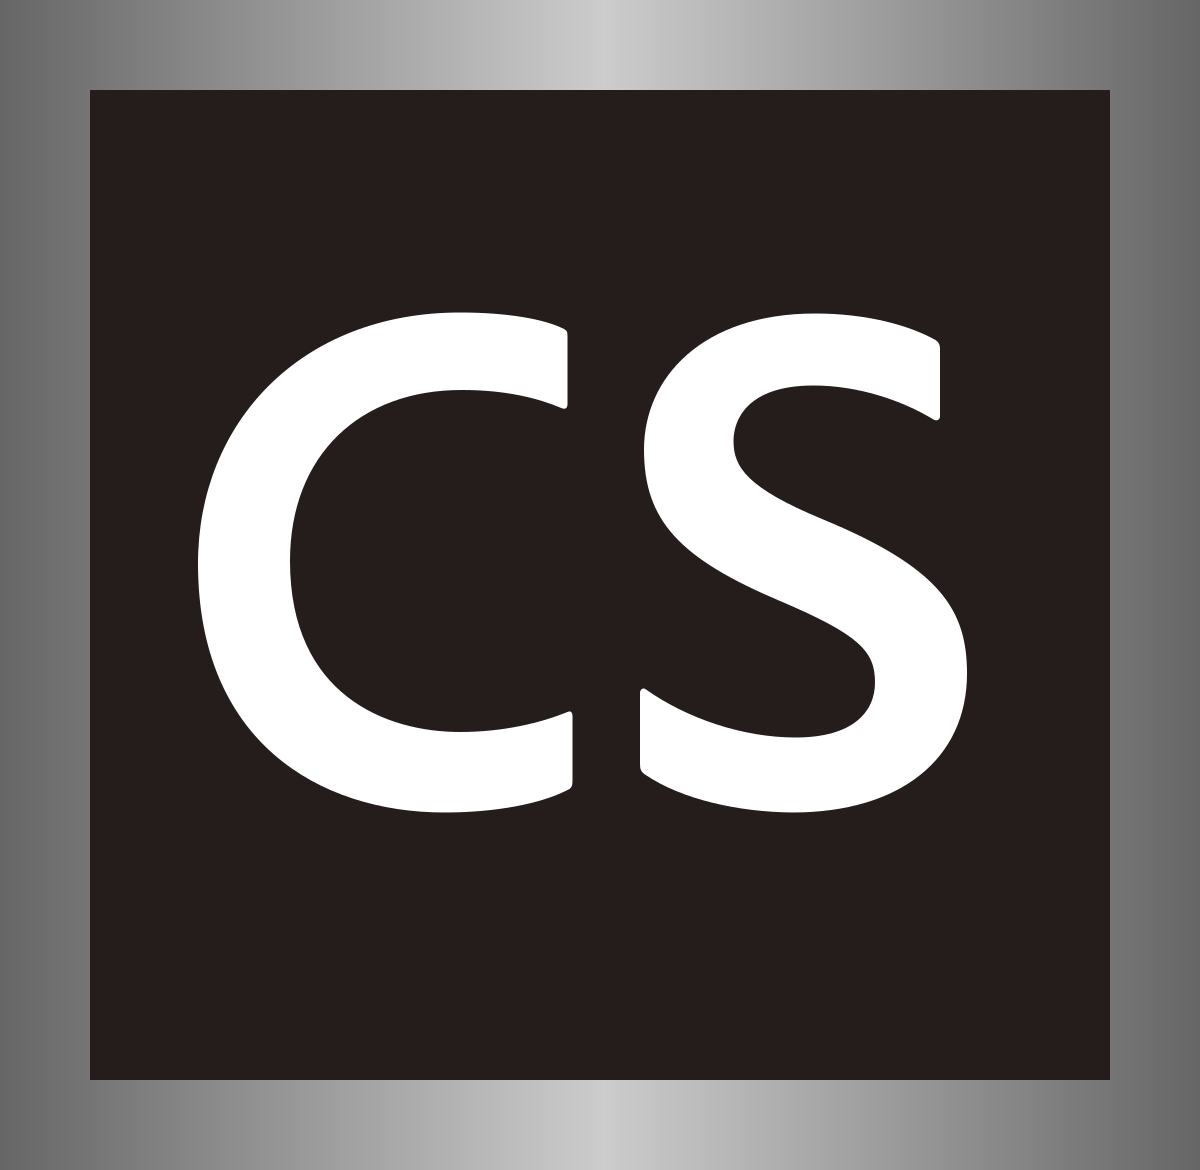 Adobe Creative Suite's Logo